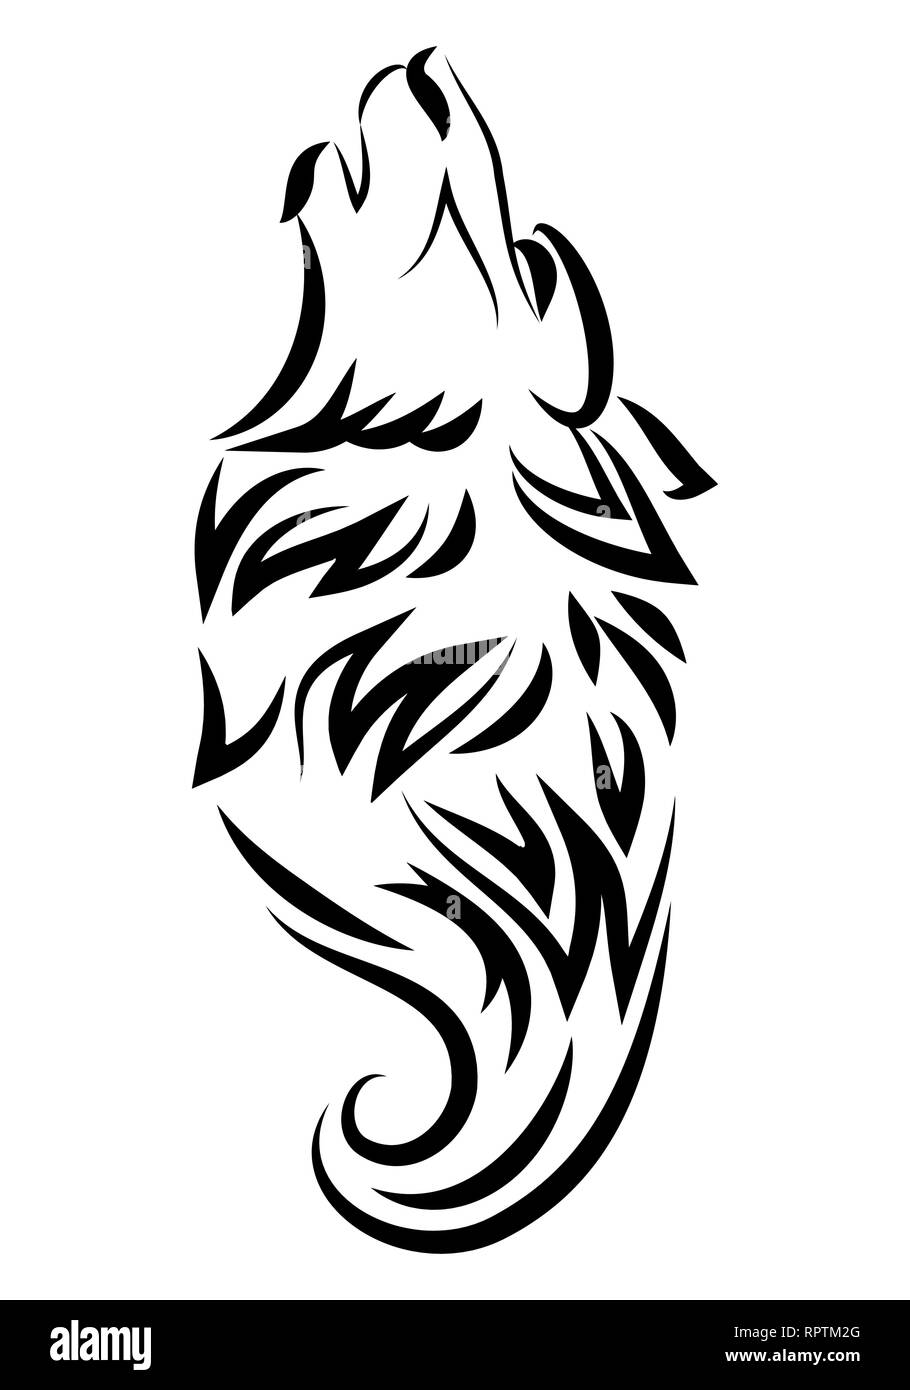 illustration of dog howling tattoo over isolated white background Stock Photo